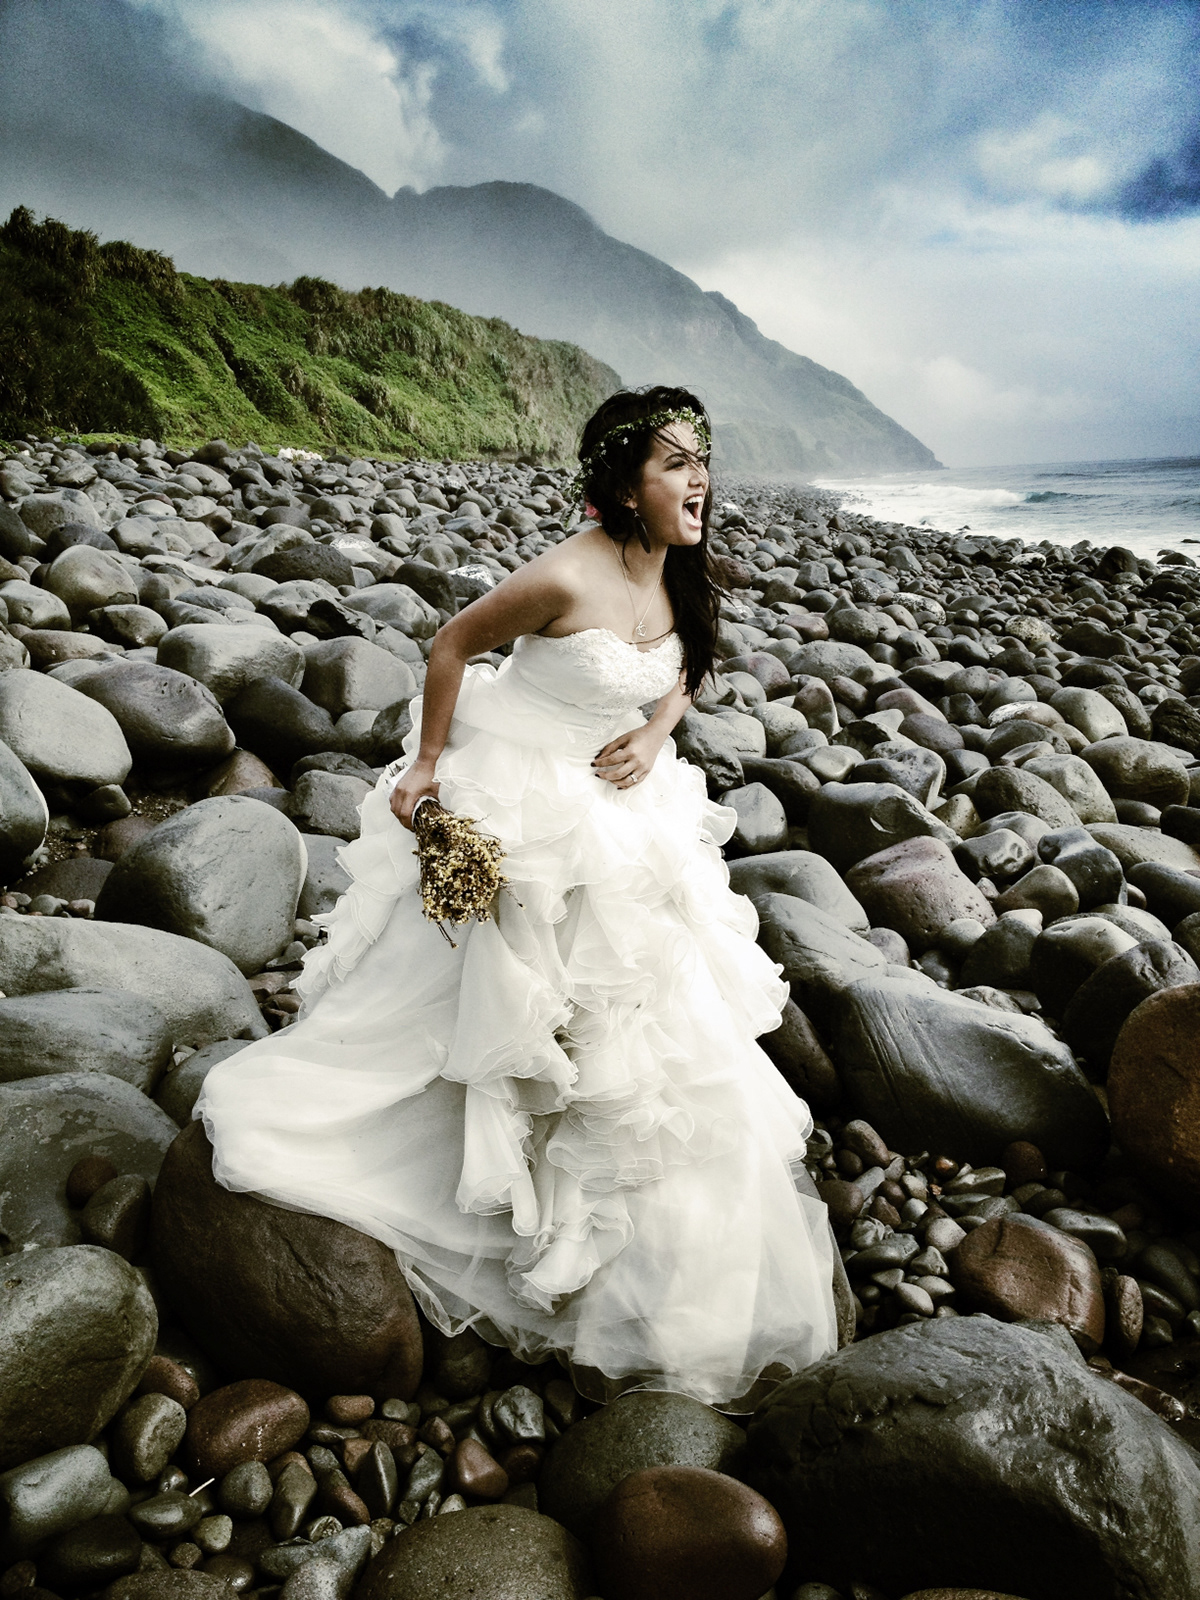 iphone  wedding  trash  Dress  omar  khalifa  batanes  philippines  snapseed  focus